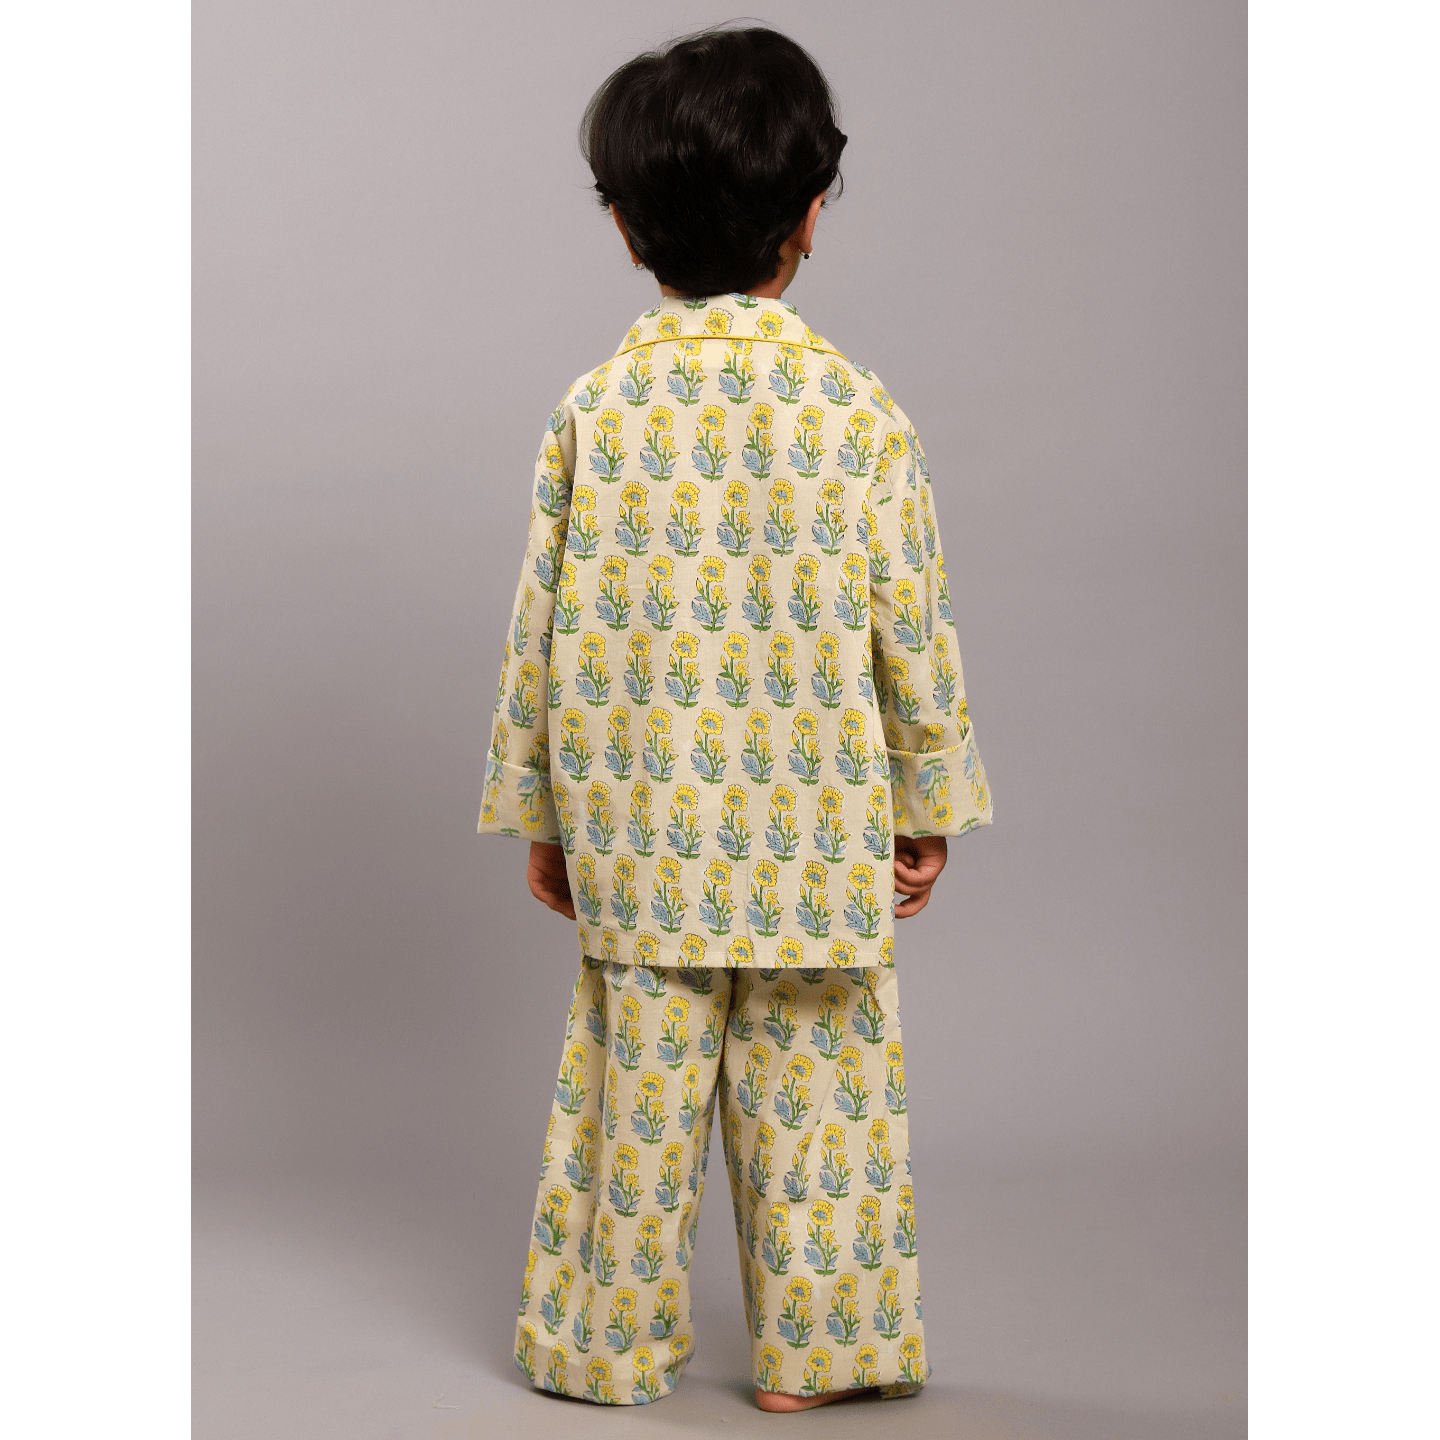 Block Printed Girl's Nightsuit set Ethnic Beige- Yellow Buti